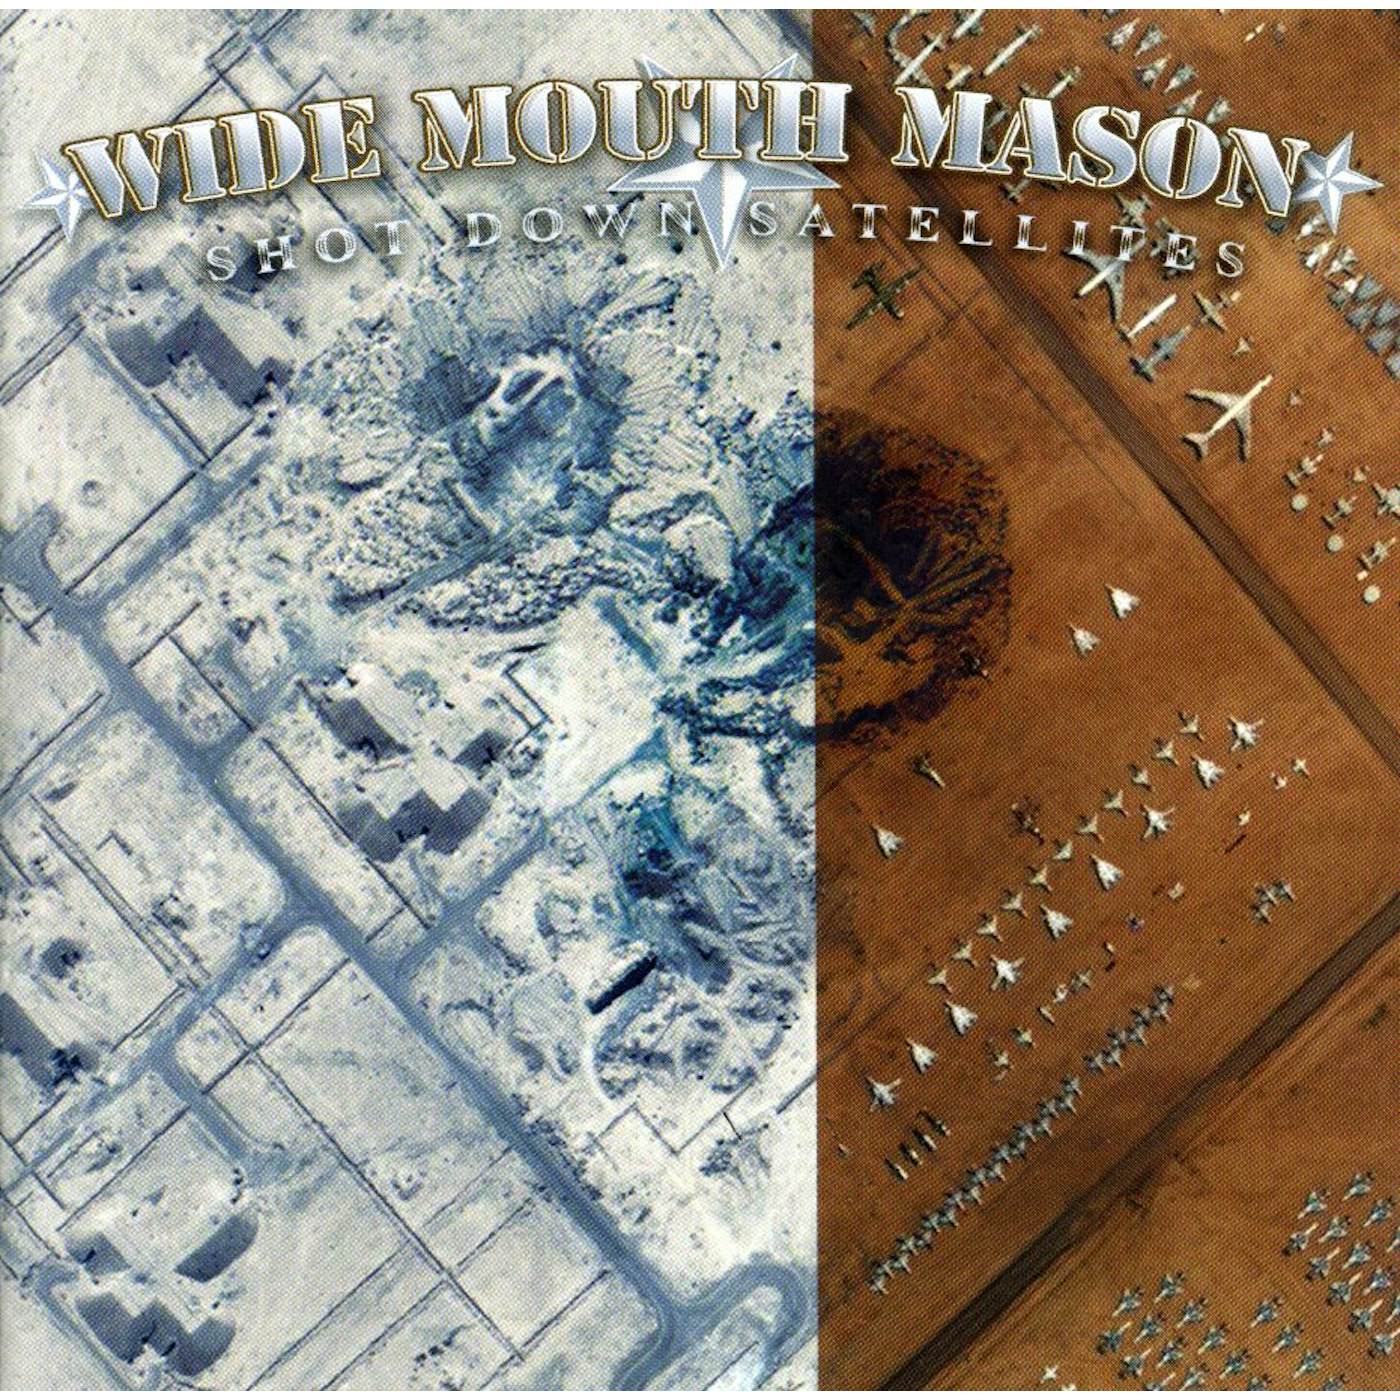 Wide Mouth Mason SHOT DOWN SATELLITES CD